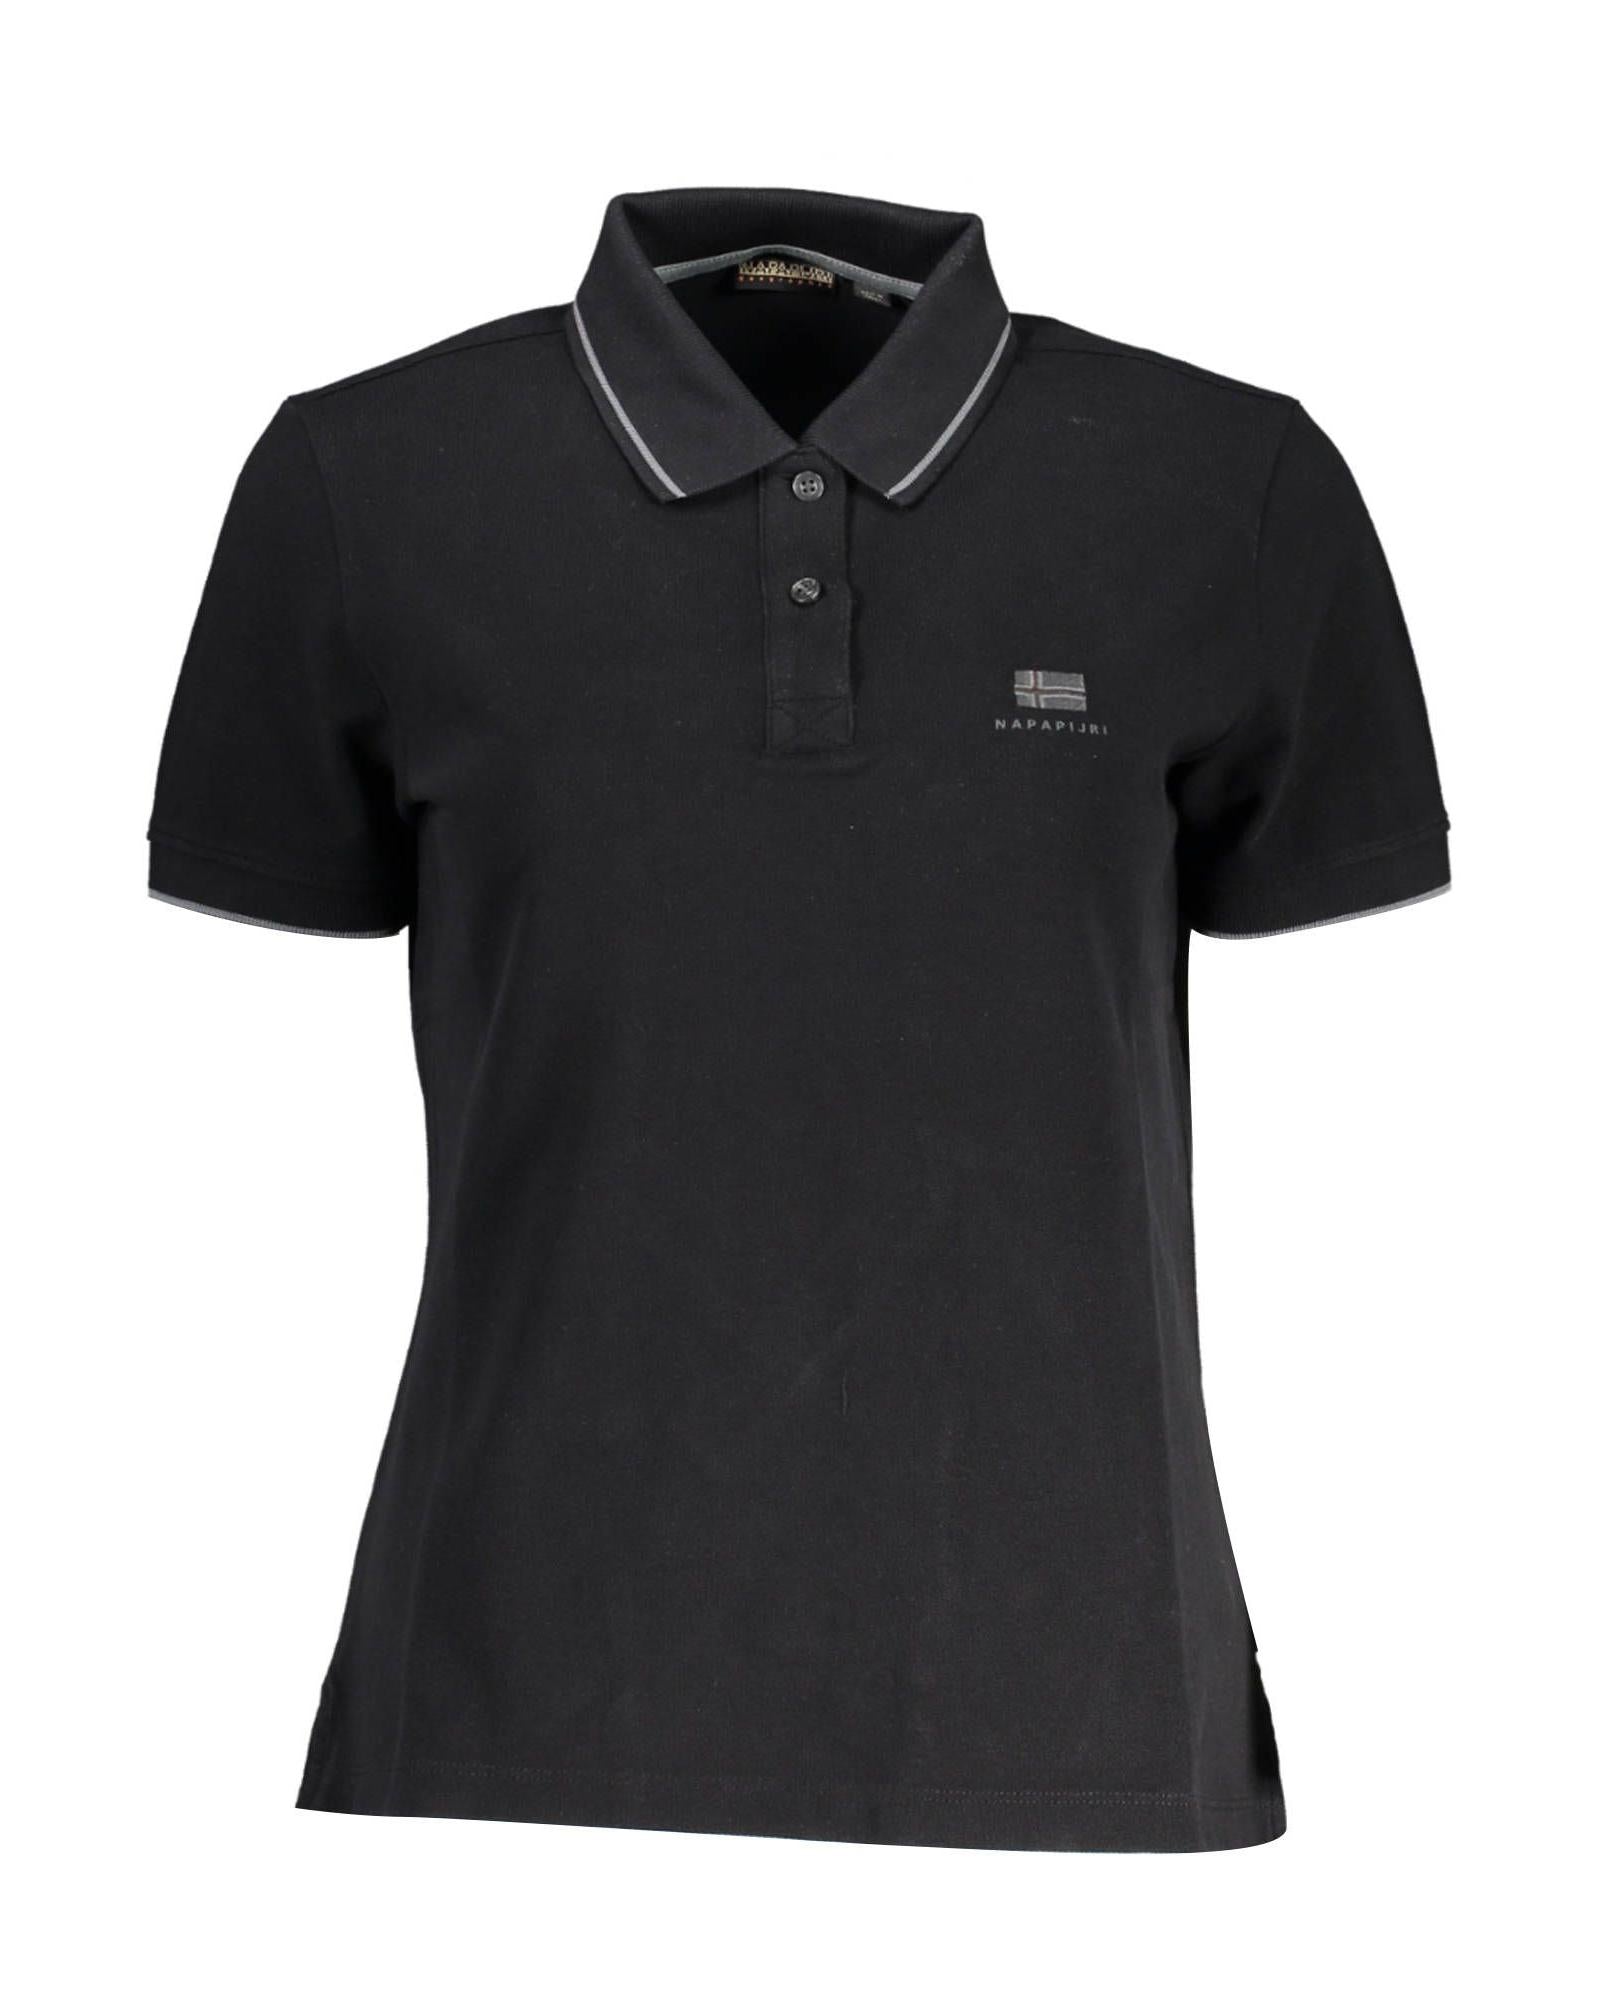 Men's Black Cotton Polo Shirt - S